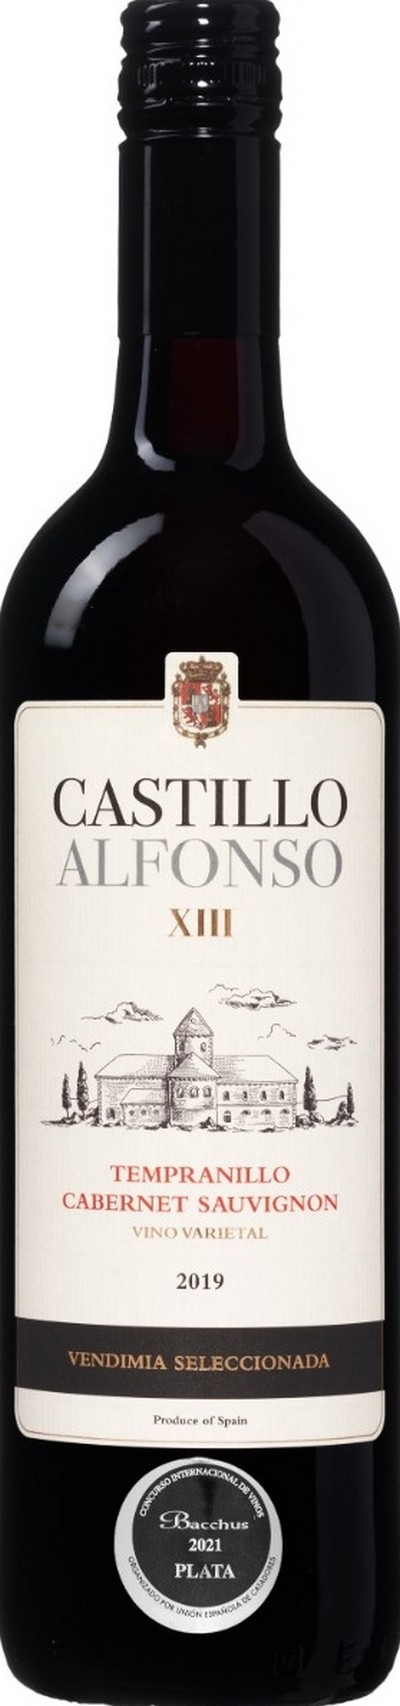 castillo-alfonso-xiii-tempranillo-cabernet-sauvignon-vino-varietal-2019